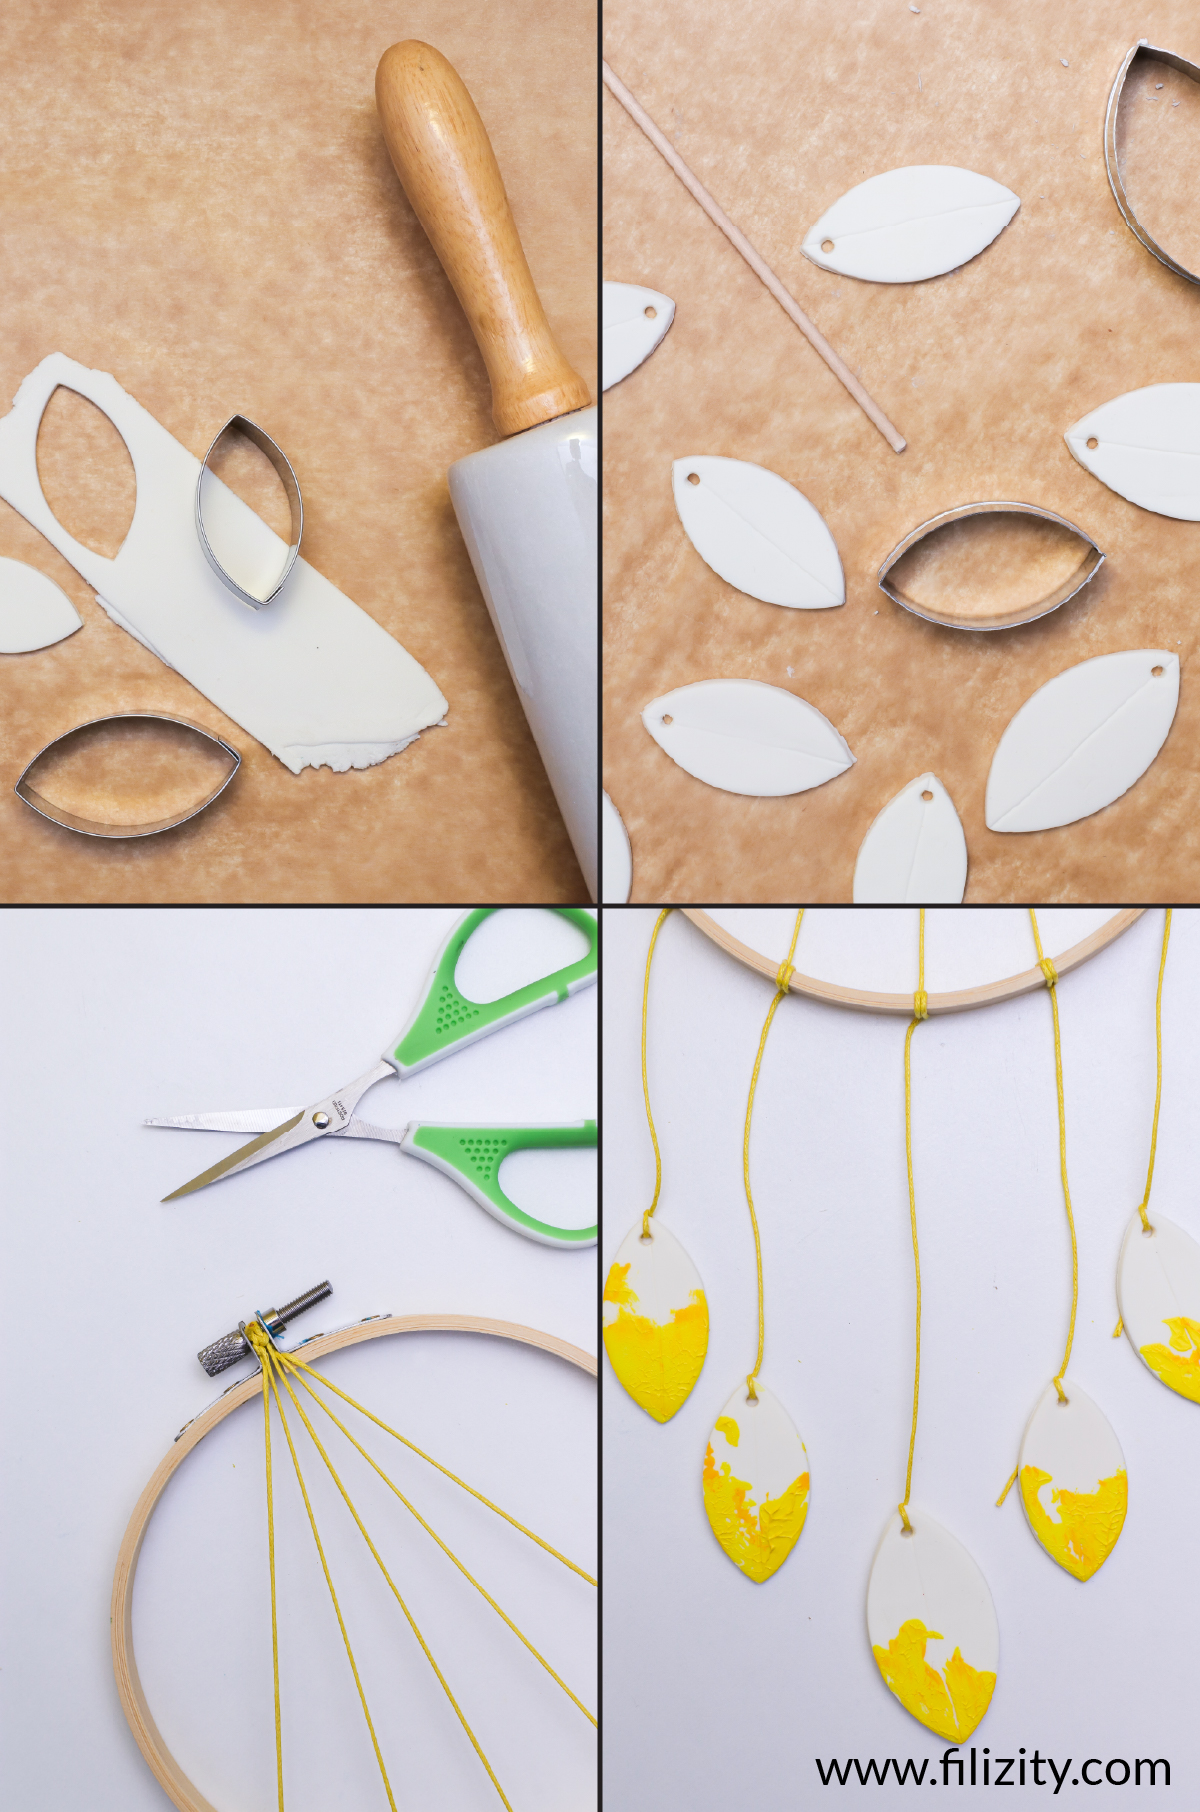 Blätter-Wanddeko aus Kaltporzellan selber machen | Filizity. Kreativmagazin & DIY-Blog #kaltporzellan #wanddeko #minimalistisch